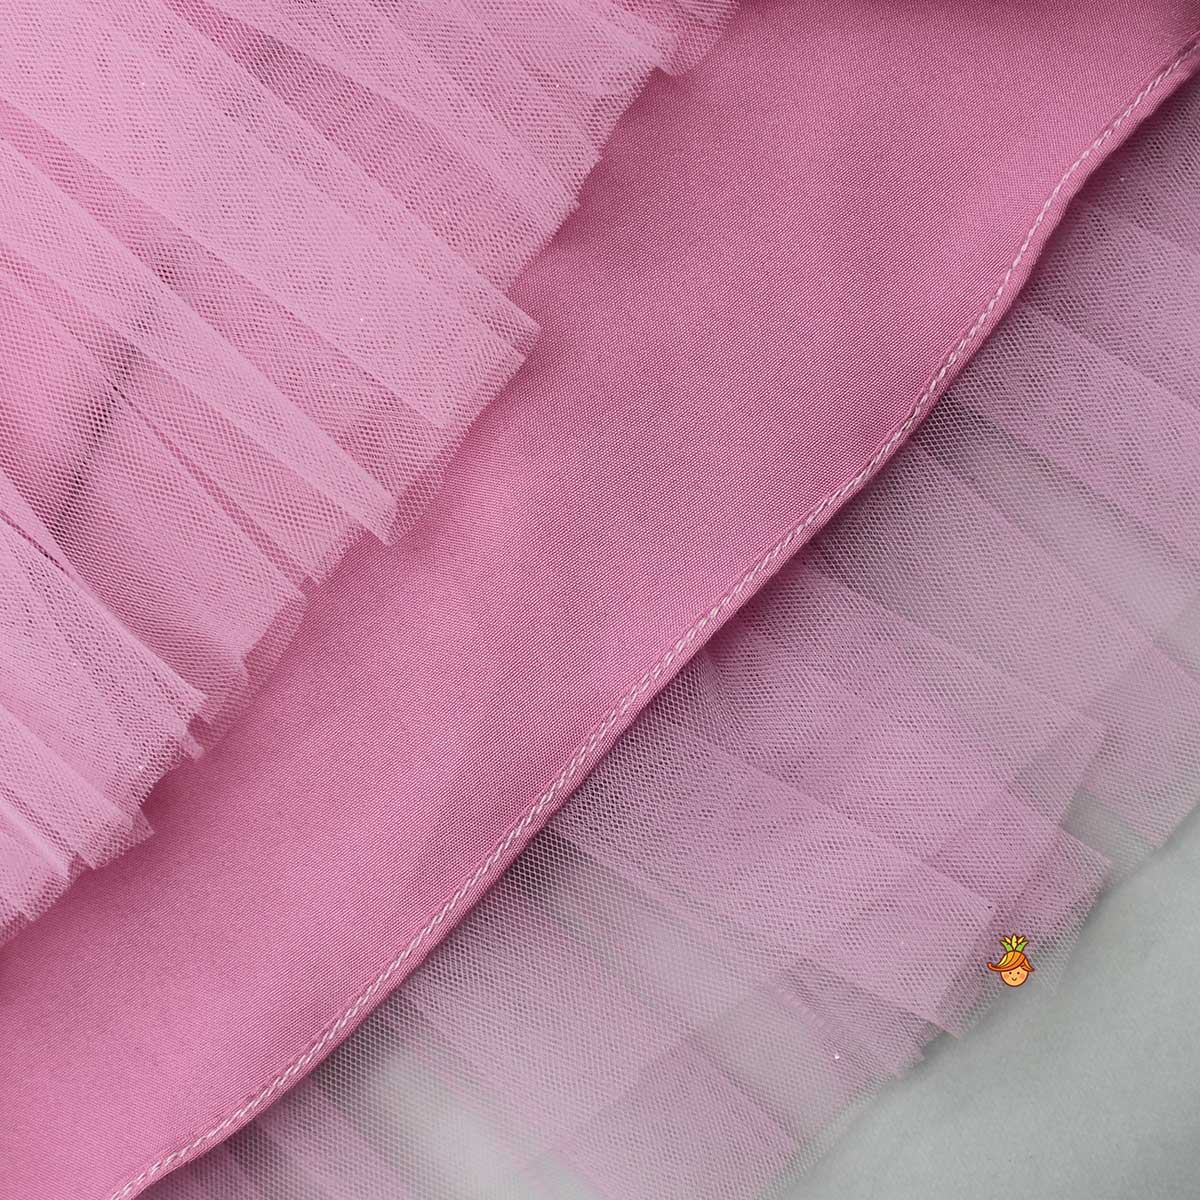 Pre Order: Dual Bow Enhanced Pink One Shoulder Dress